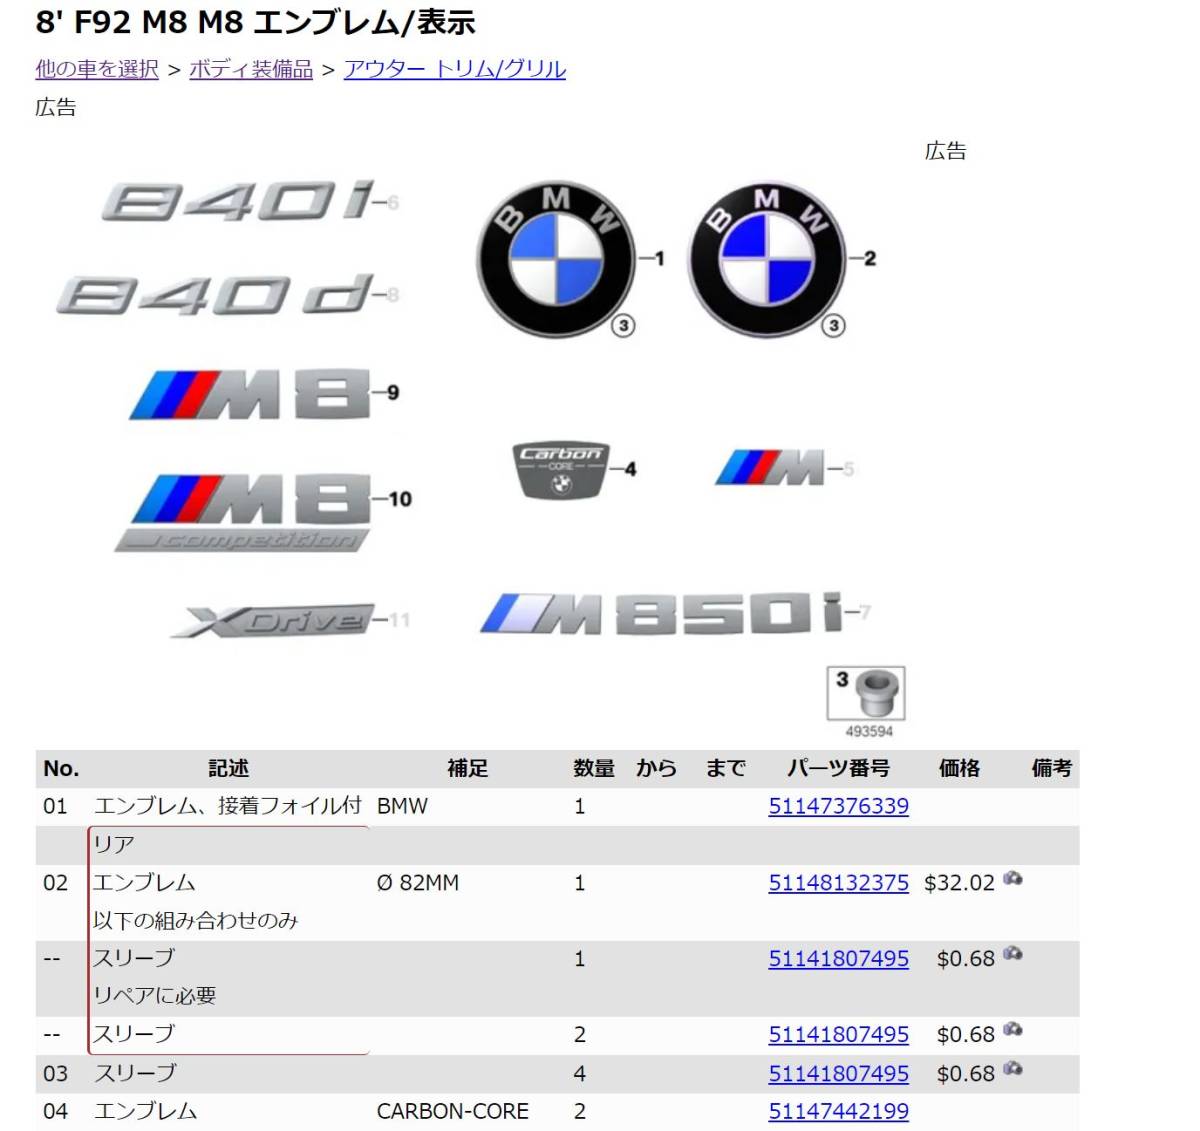 BMW ETK parts list Japanese correspondence E46 F46 E90 E91 E92 E93 F30 G20 G21 F80 F32 F33 F82 F83 F36 M3 M4